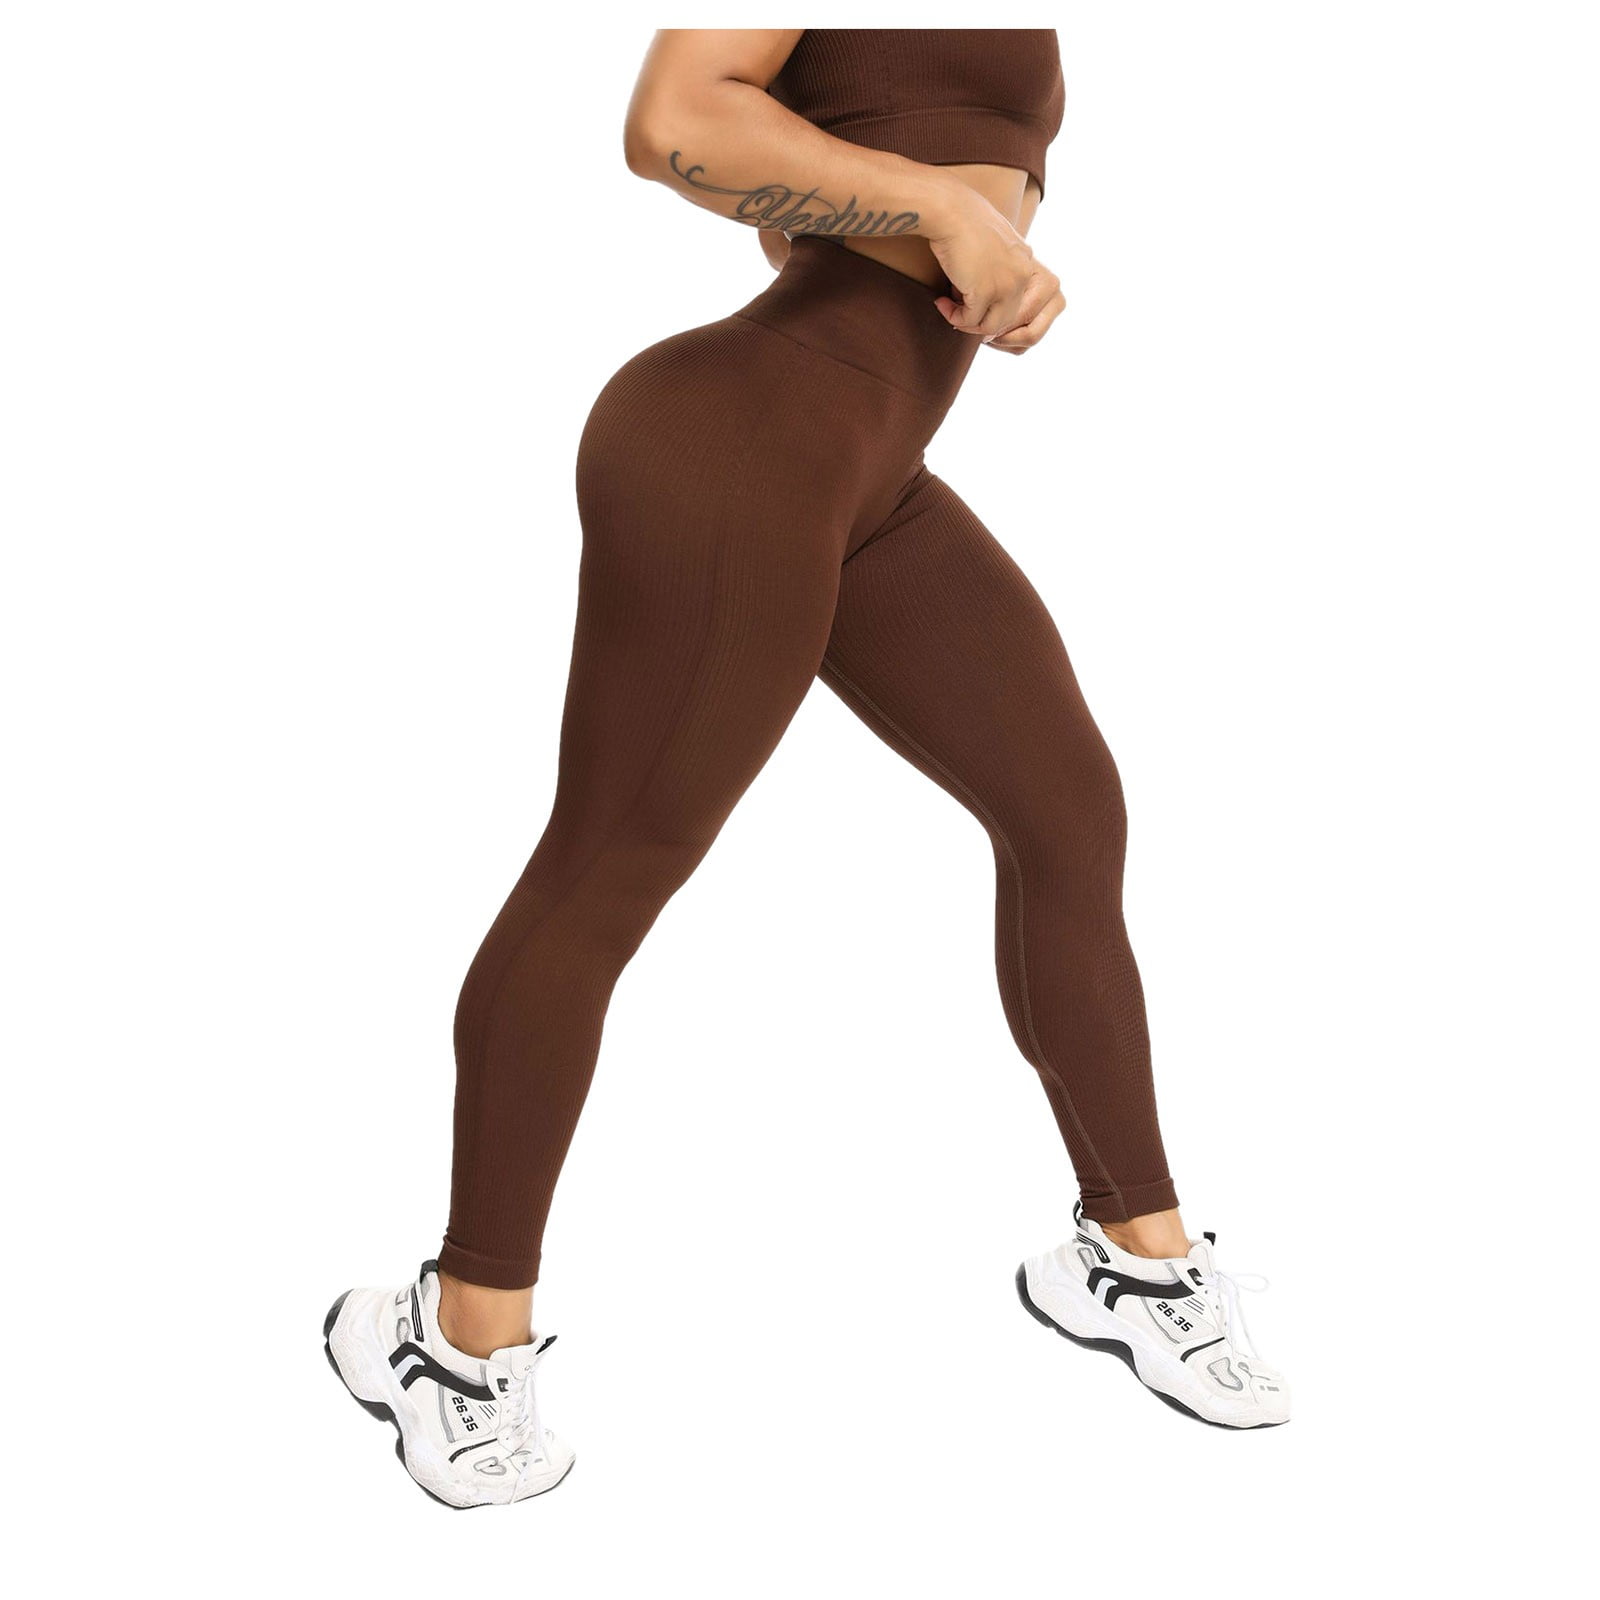 JDEFEG Maternity Yoga Pants Tall Yoga Running Sports Pants Workout